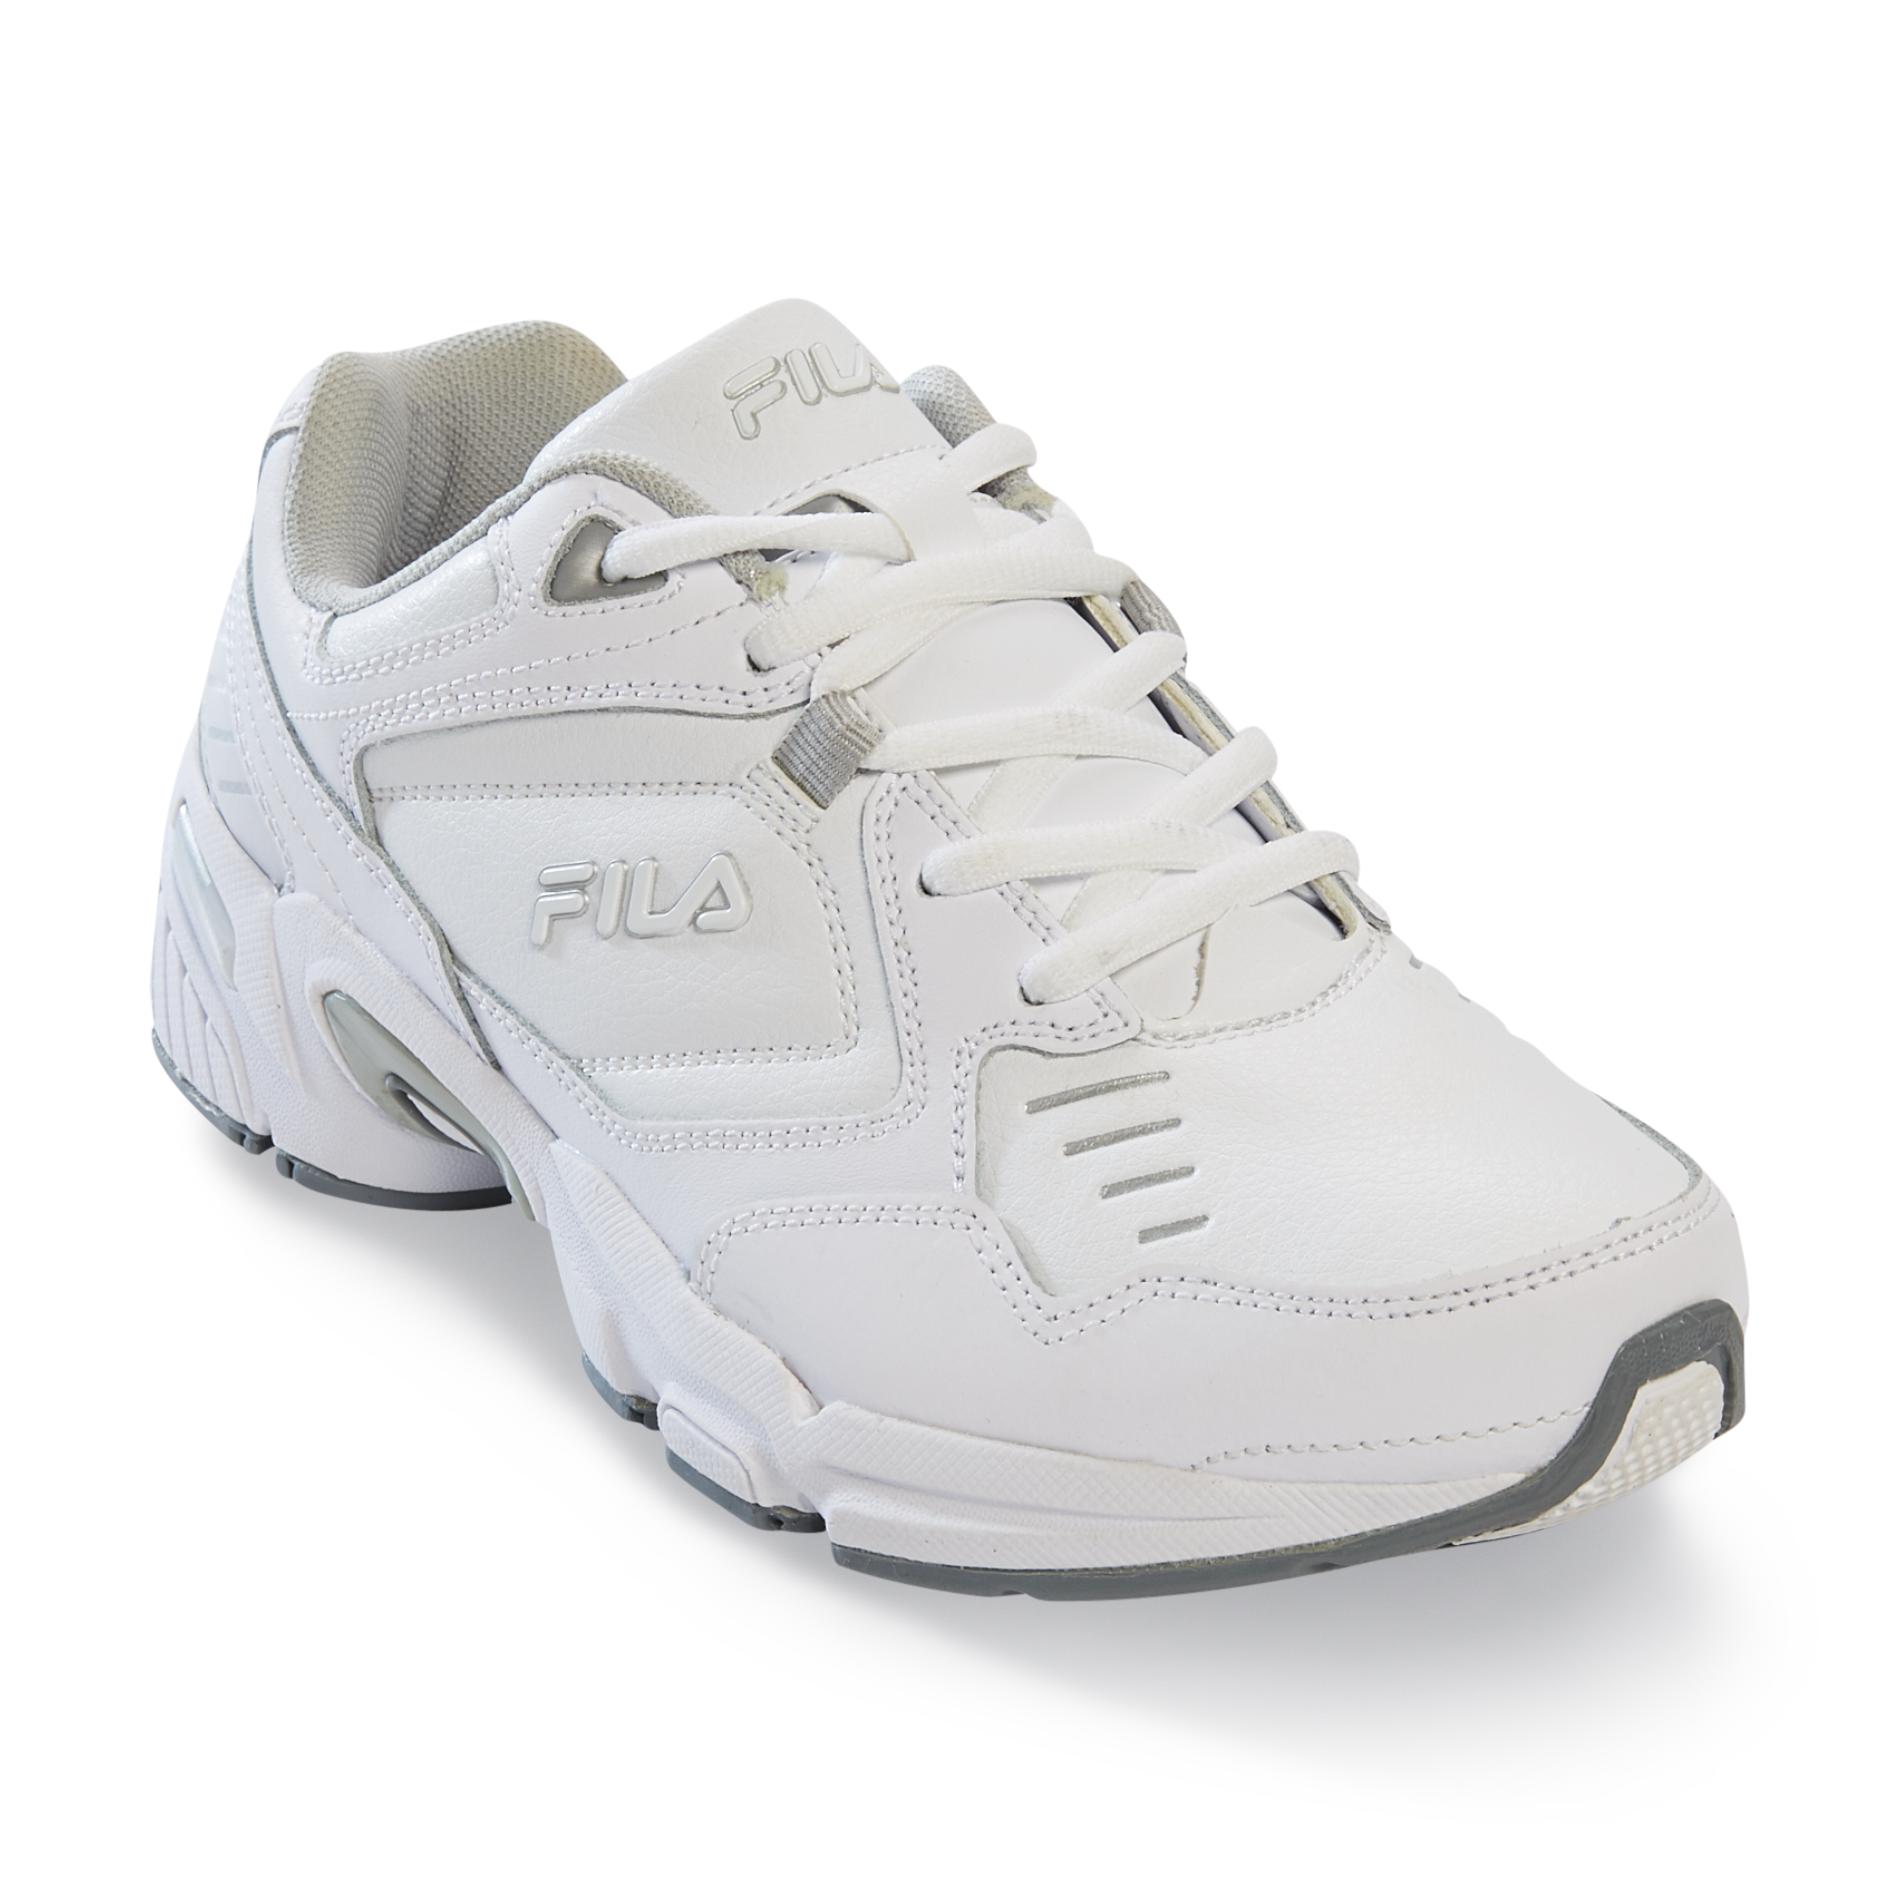 Fila Women's Memory Comfort Casual Athletic Shoe - White